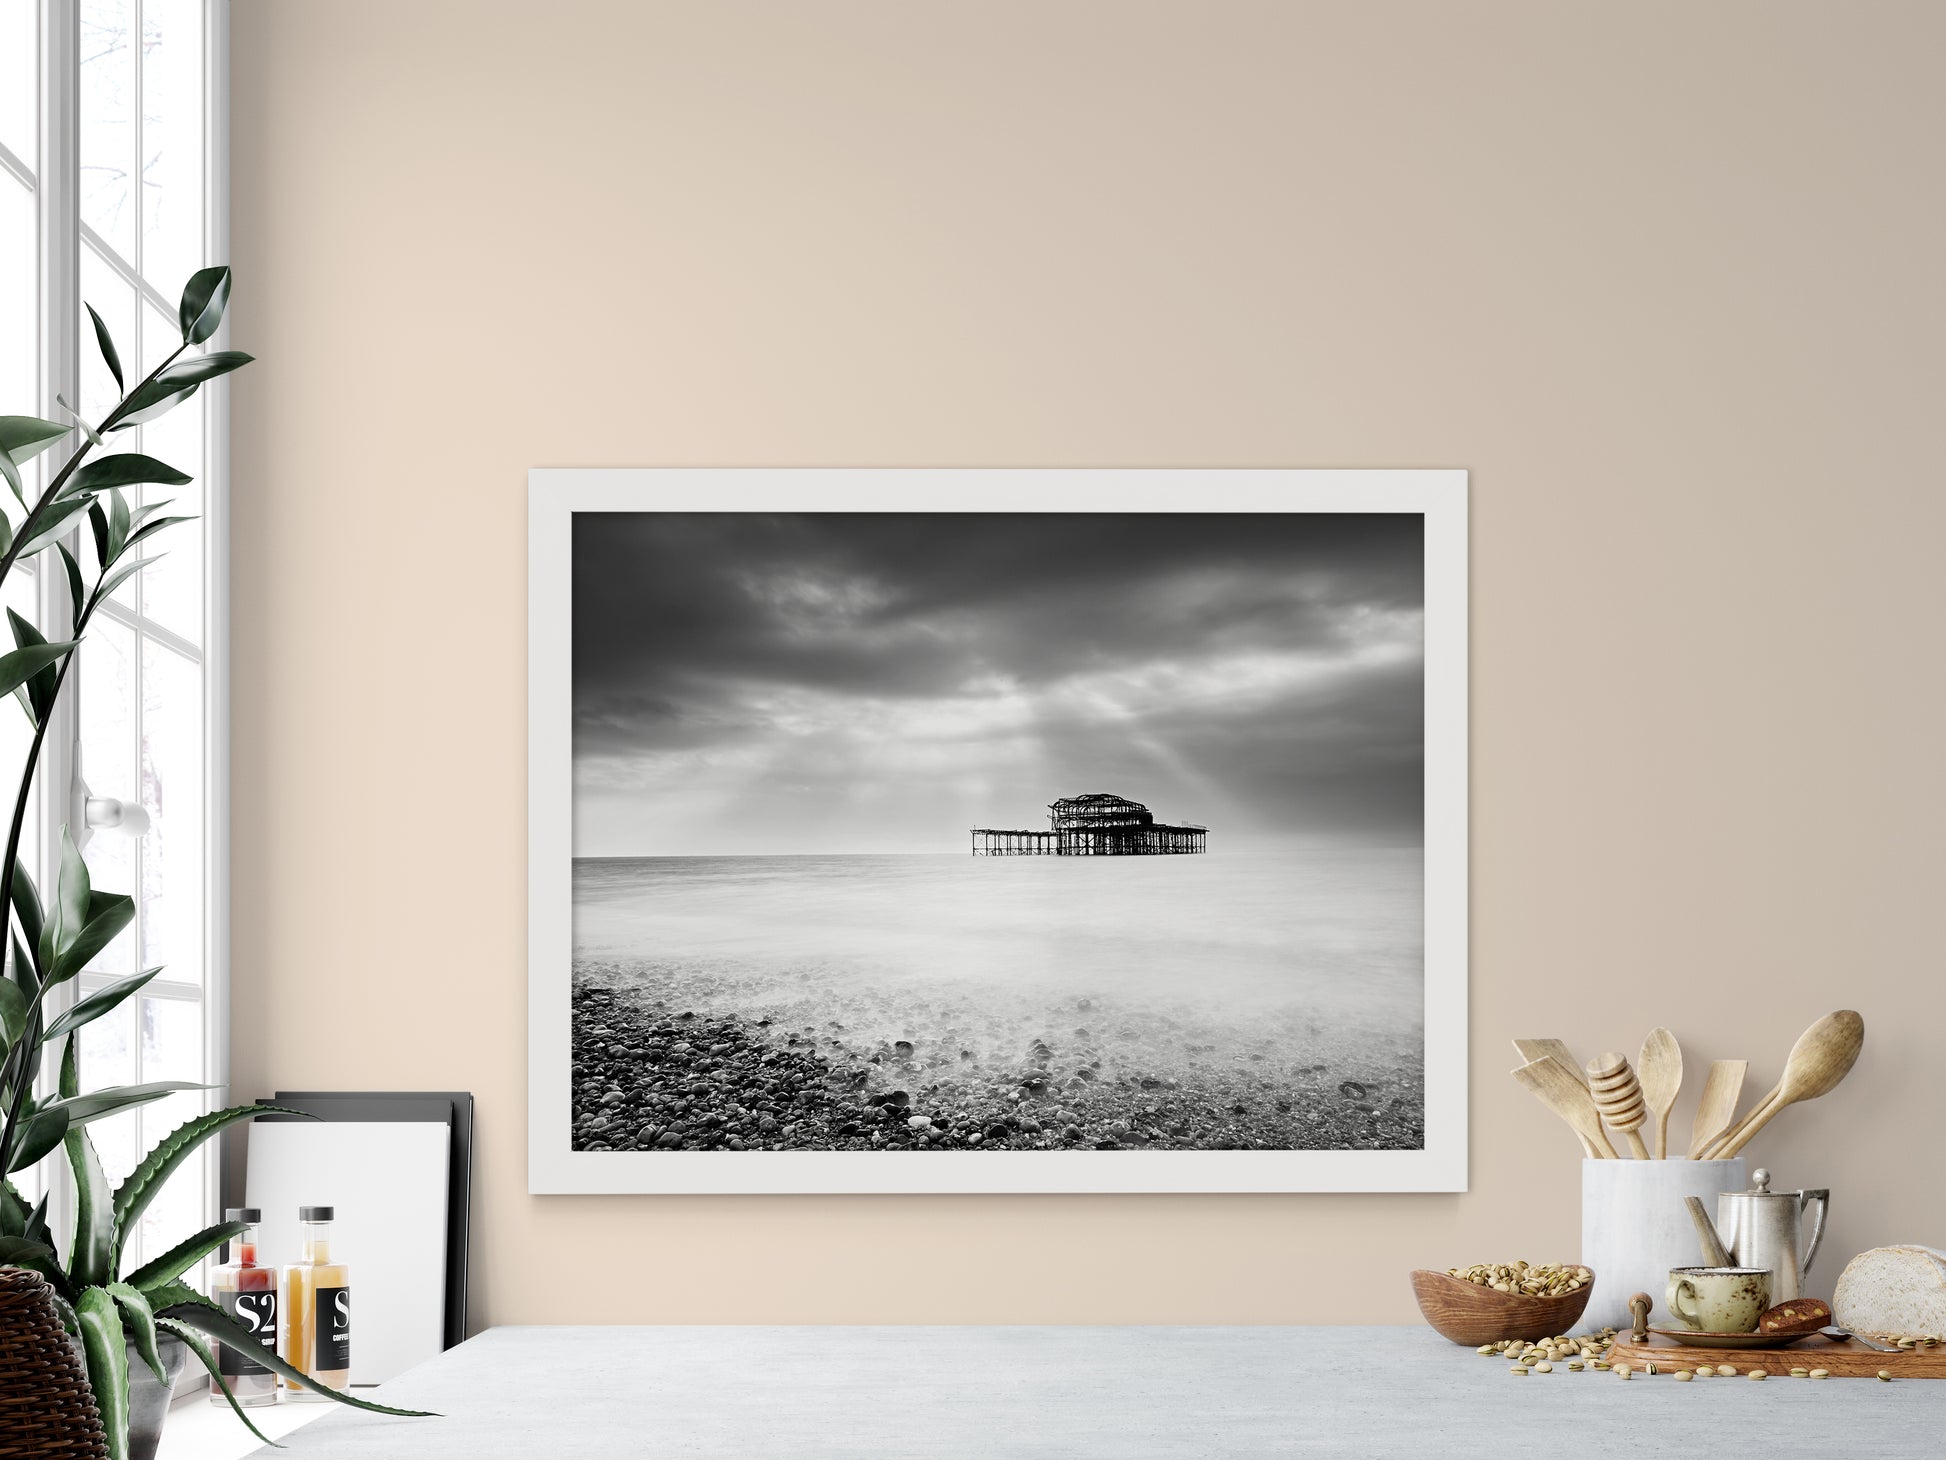 Art Decor Kitchen: Abandoned West Pier Coastal Seascape Landscape Black and White Photograph Framed Wall Art Print